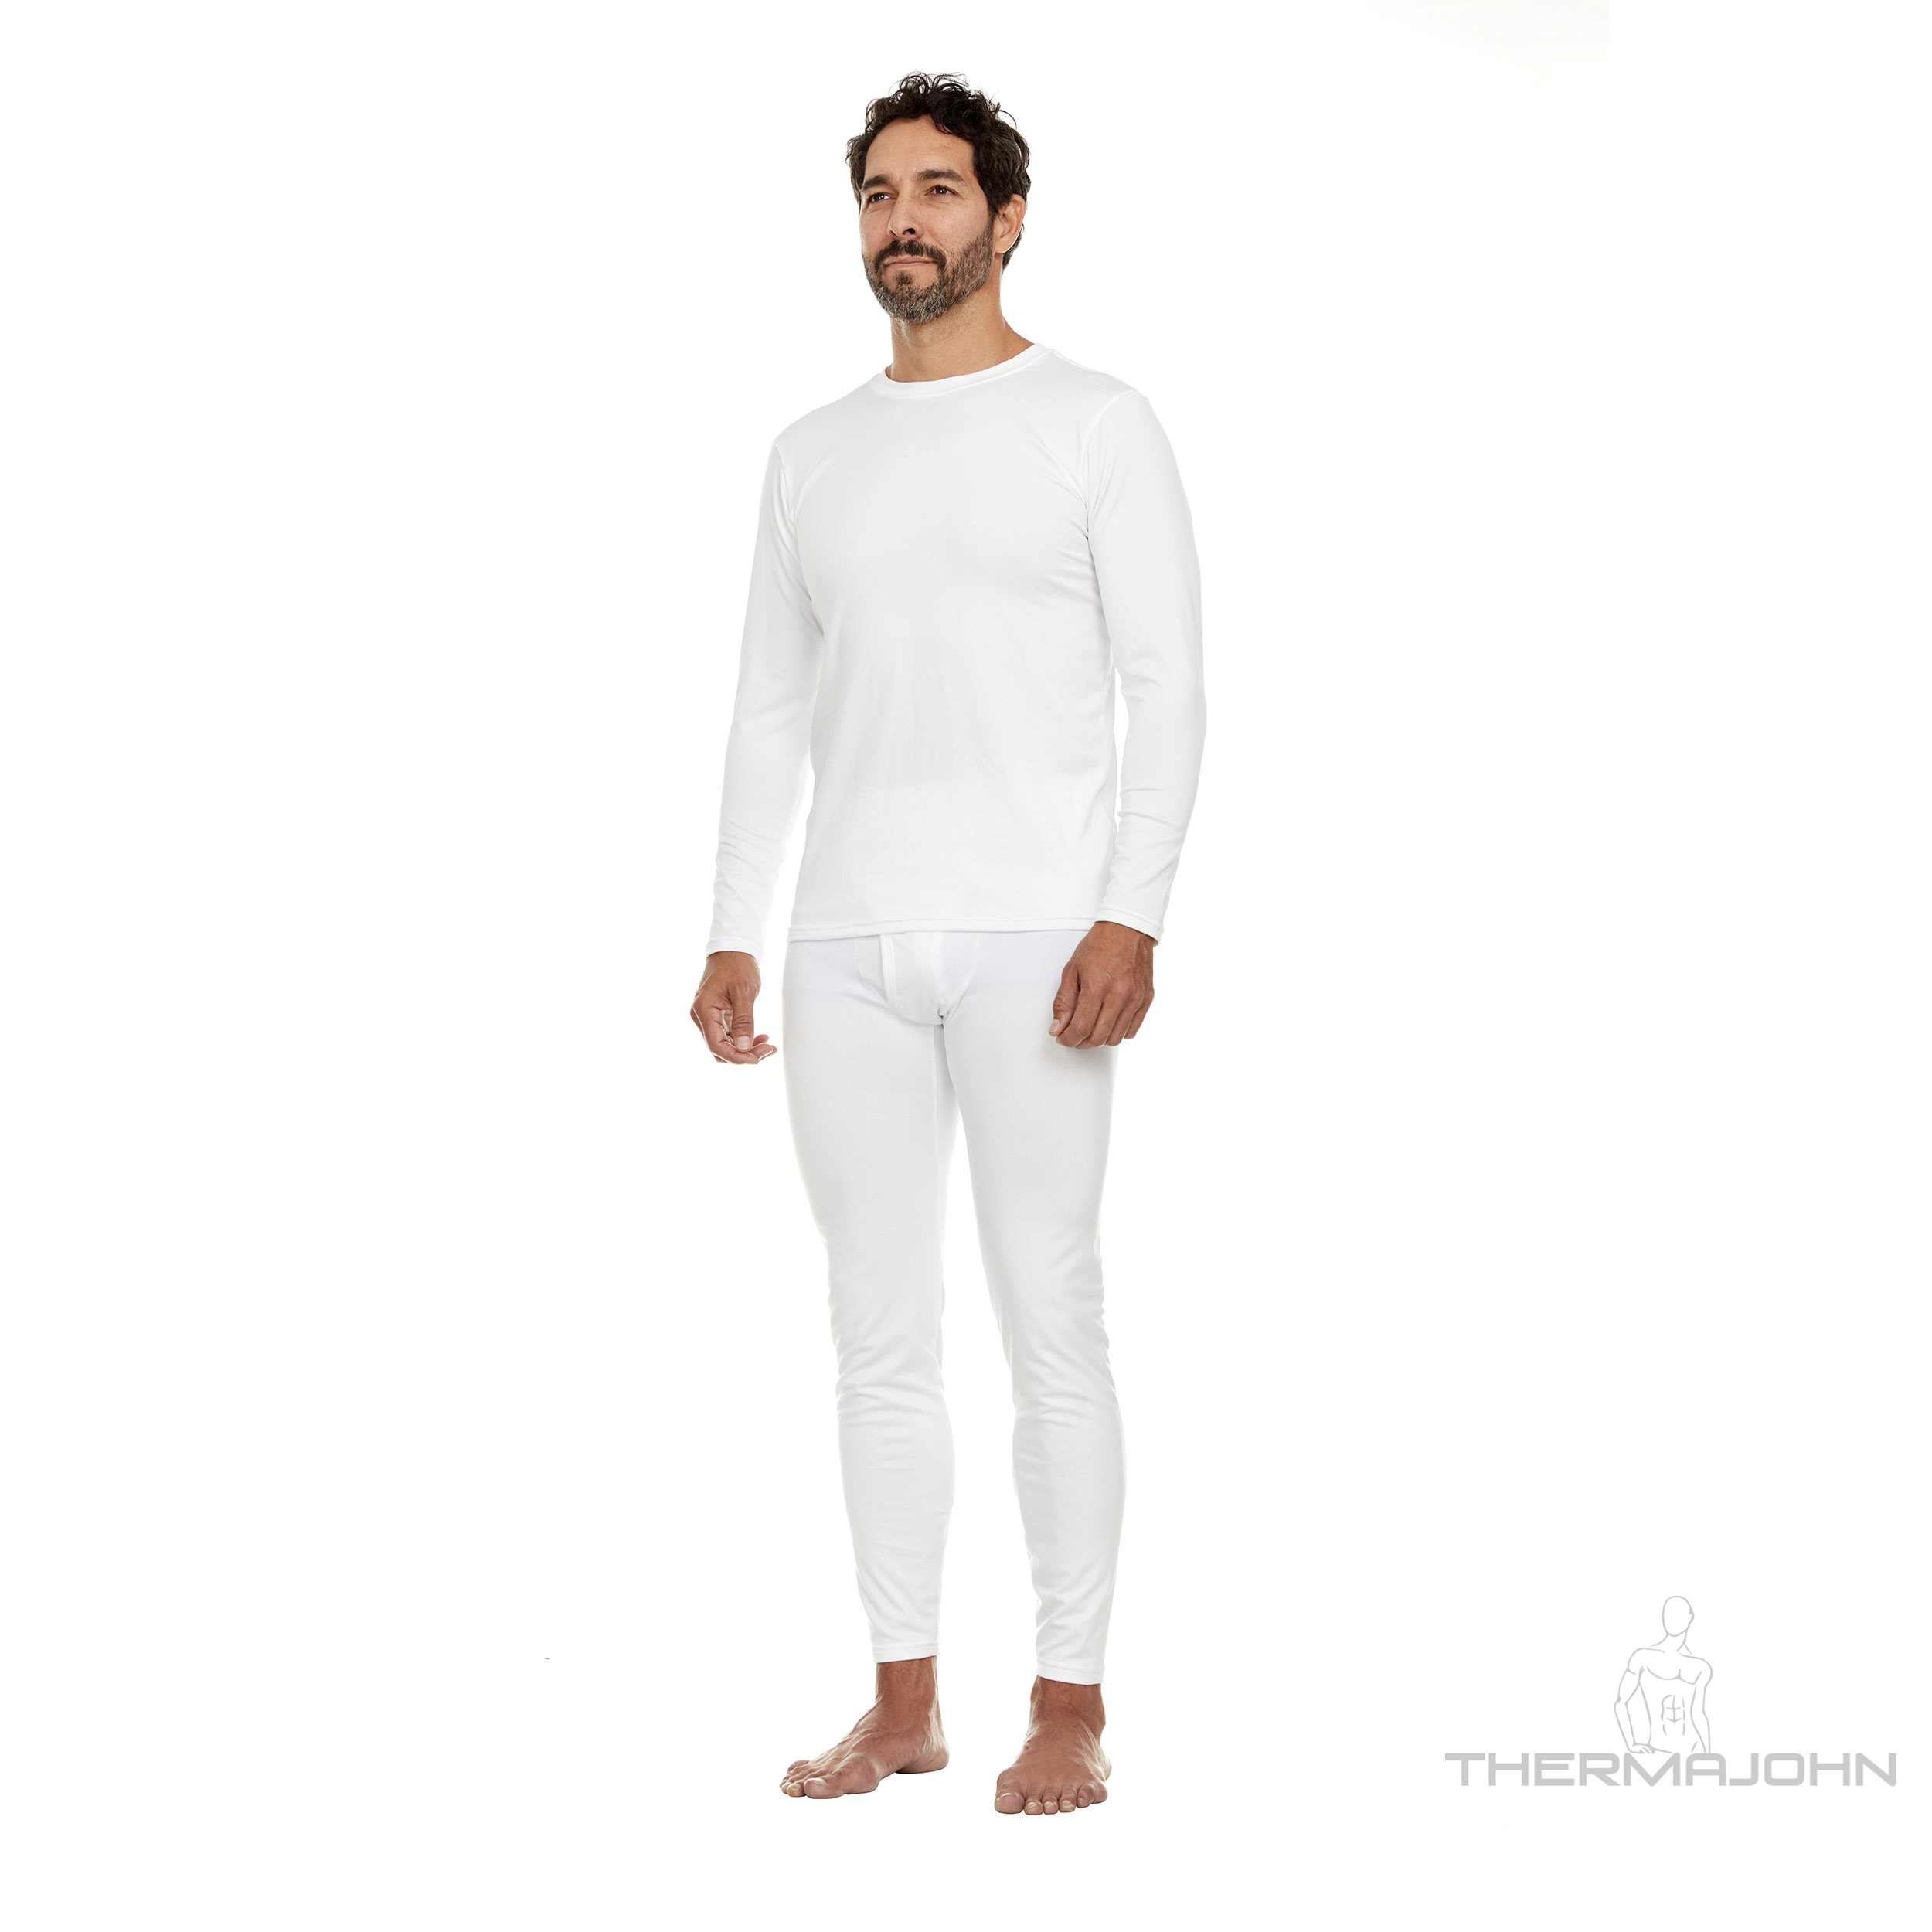 Thermajohn Long Johns Thermal Underwear for Men Crewneck Set (XS-4XL) 